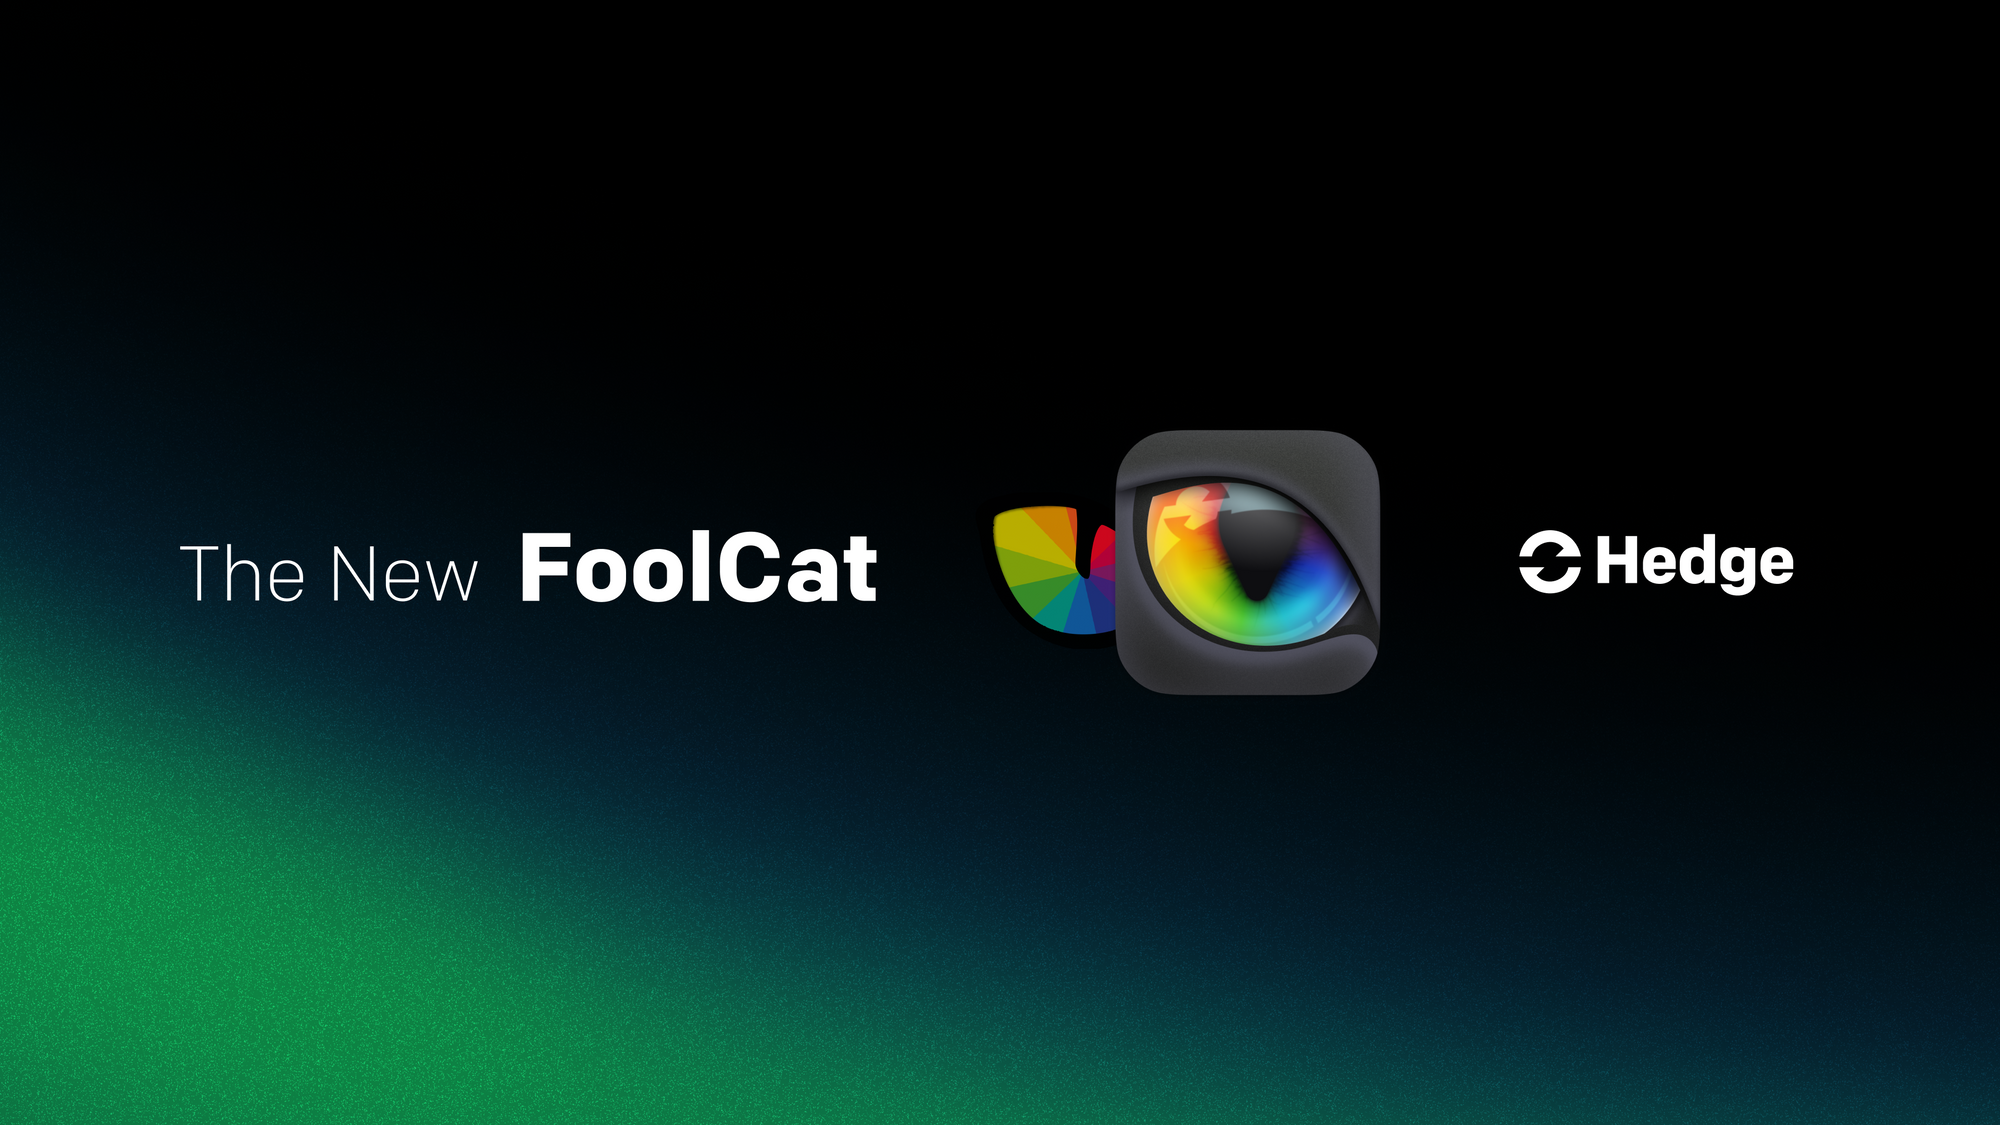 The new Foolcat